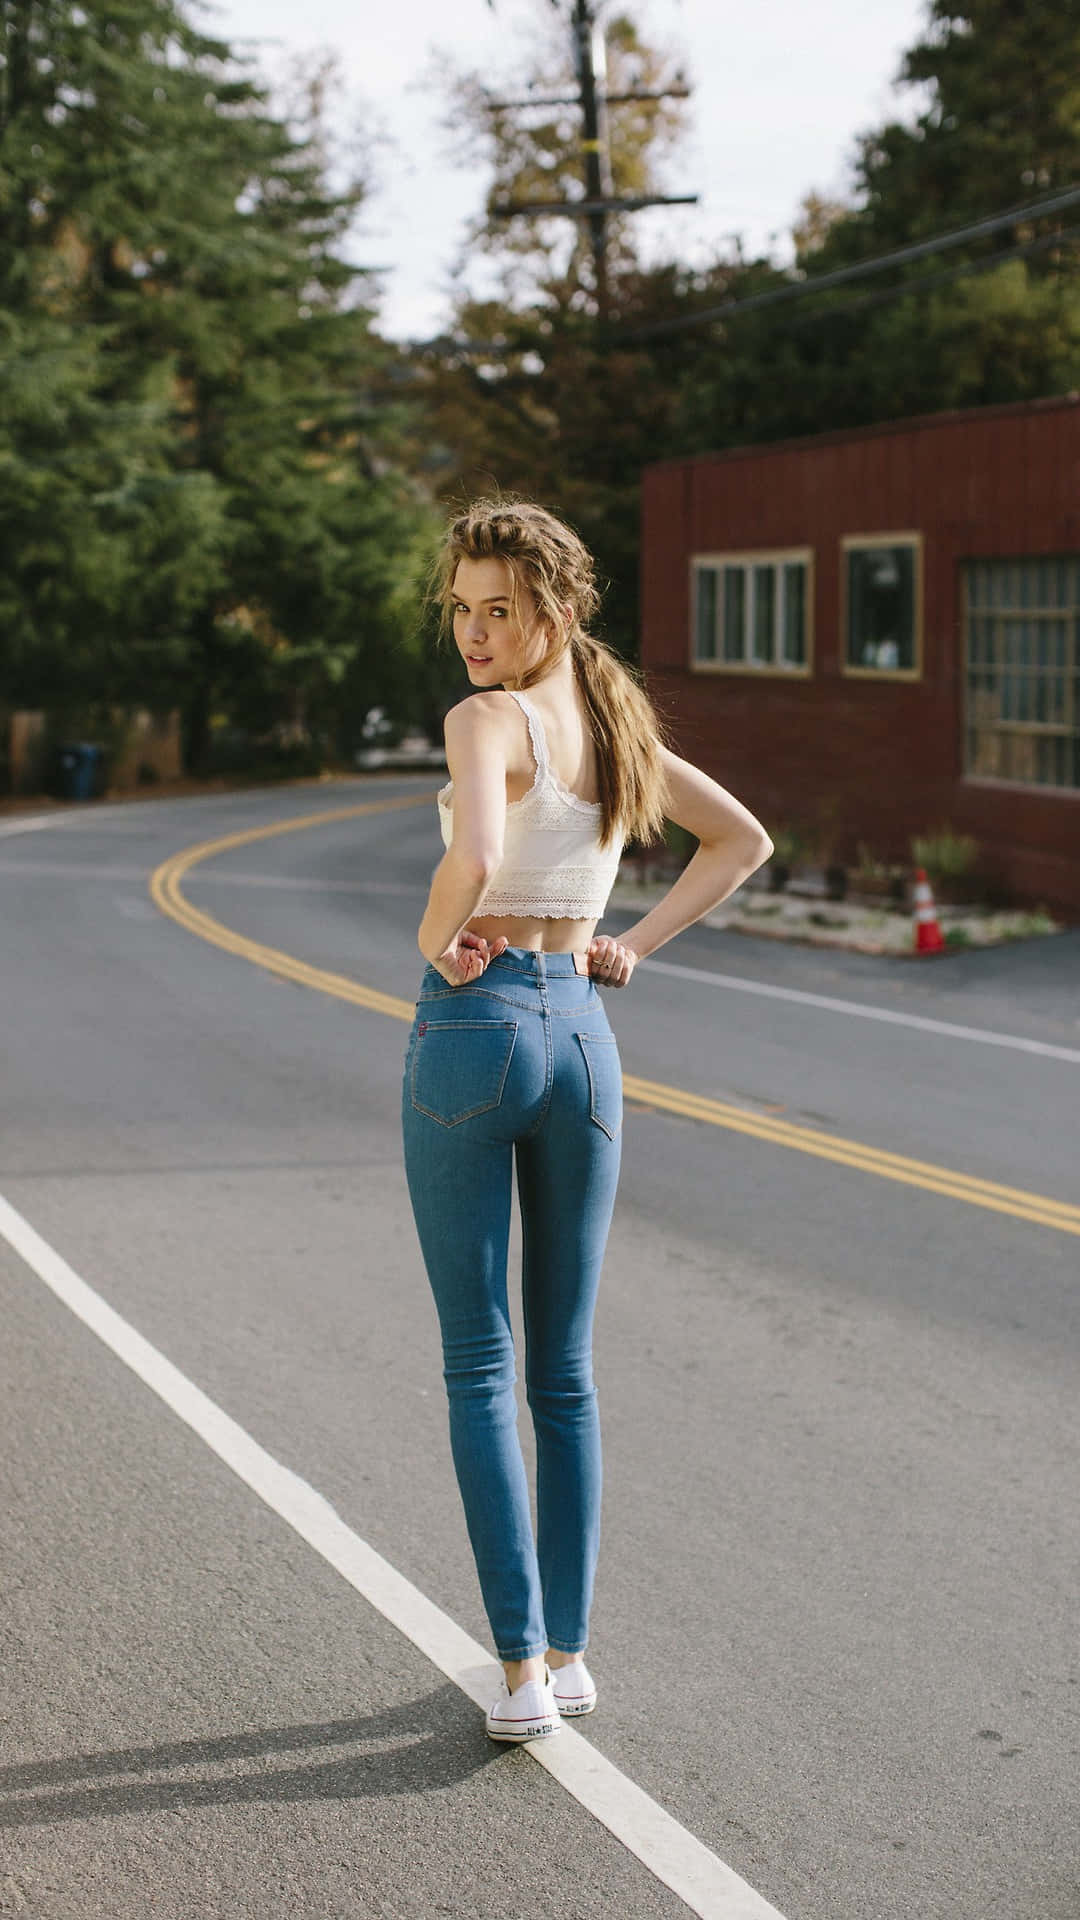 https://wallpapers.com/images/hd/girl-in-jeans-pictures-goq532hmr1h5z0du.jpg